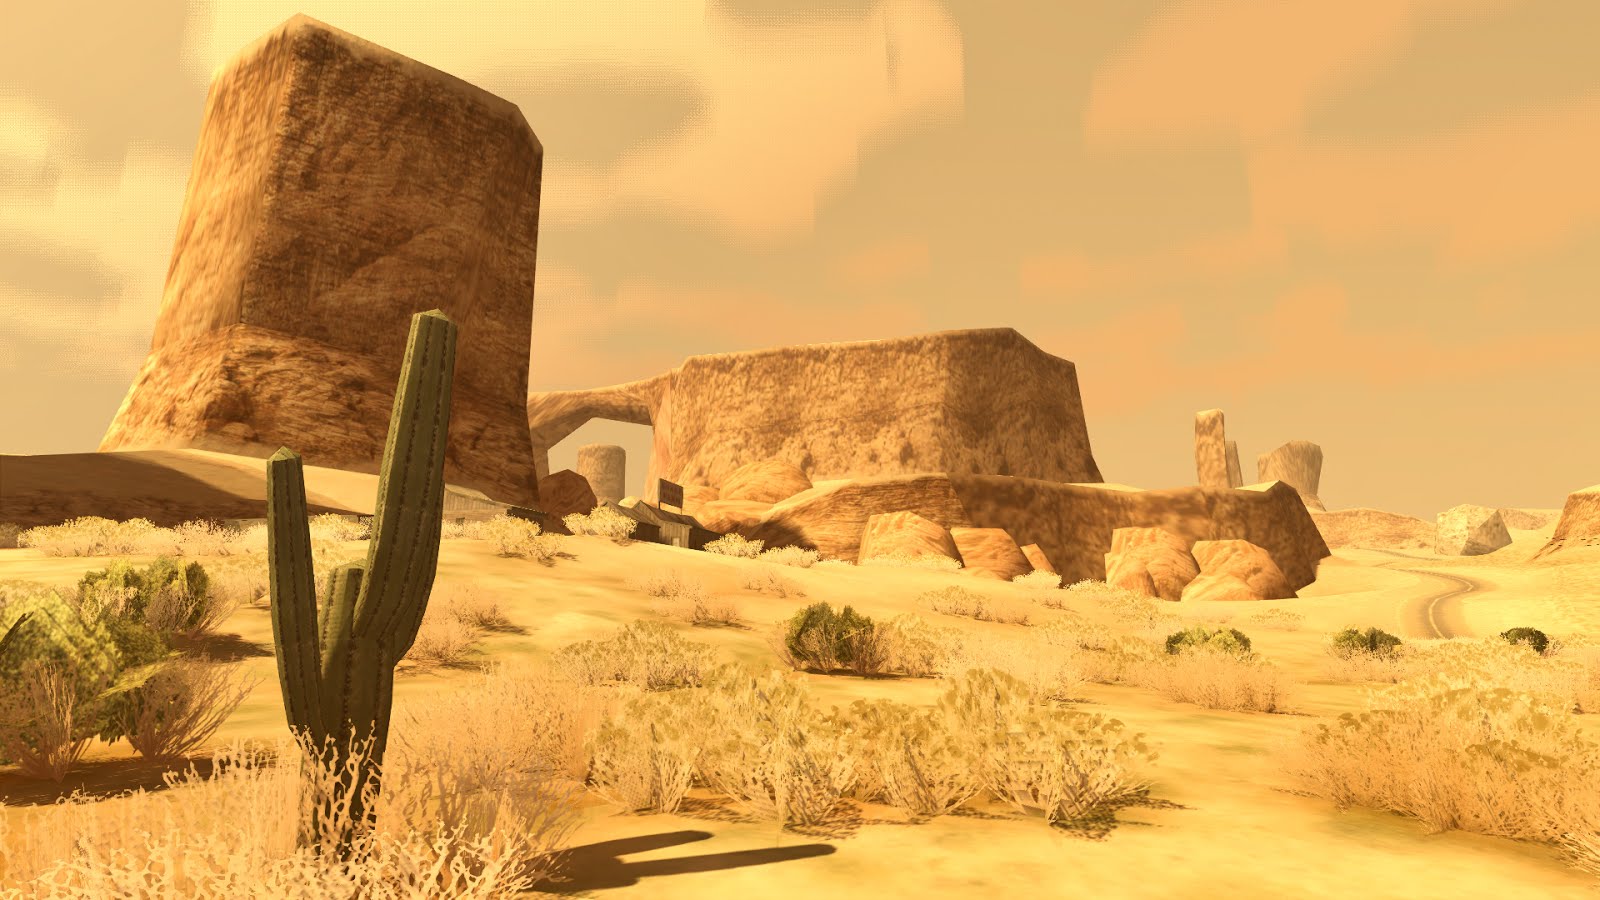 GTA San Andreas - PS2 Atmosphere RenderHook and Retexture Mods - BiliBili